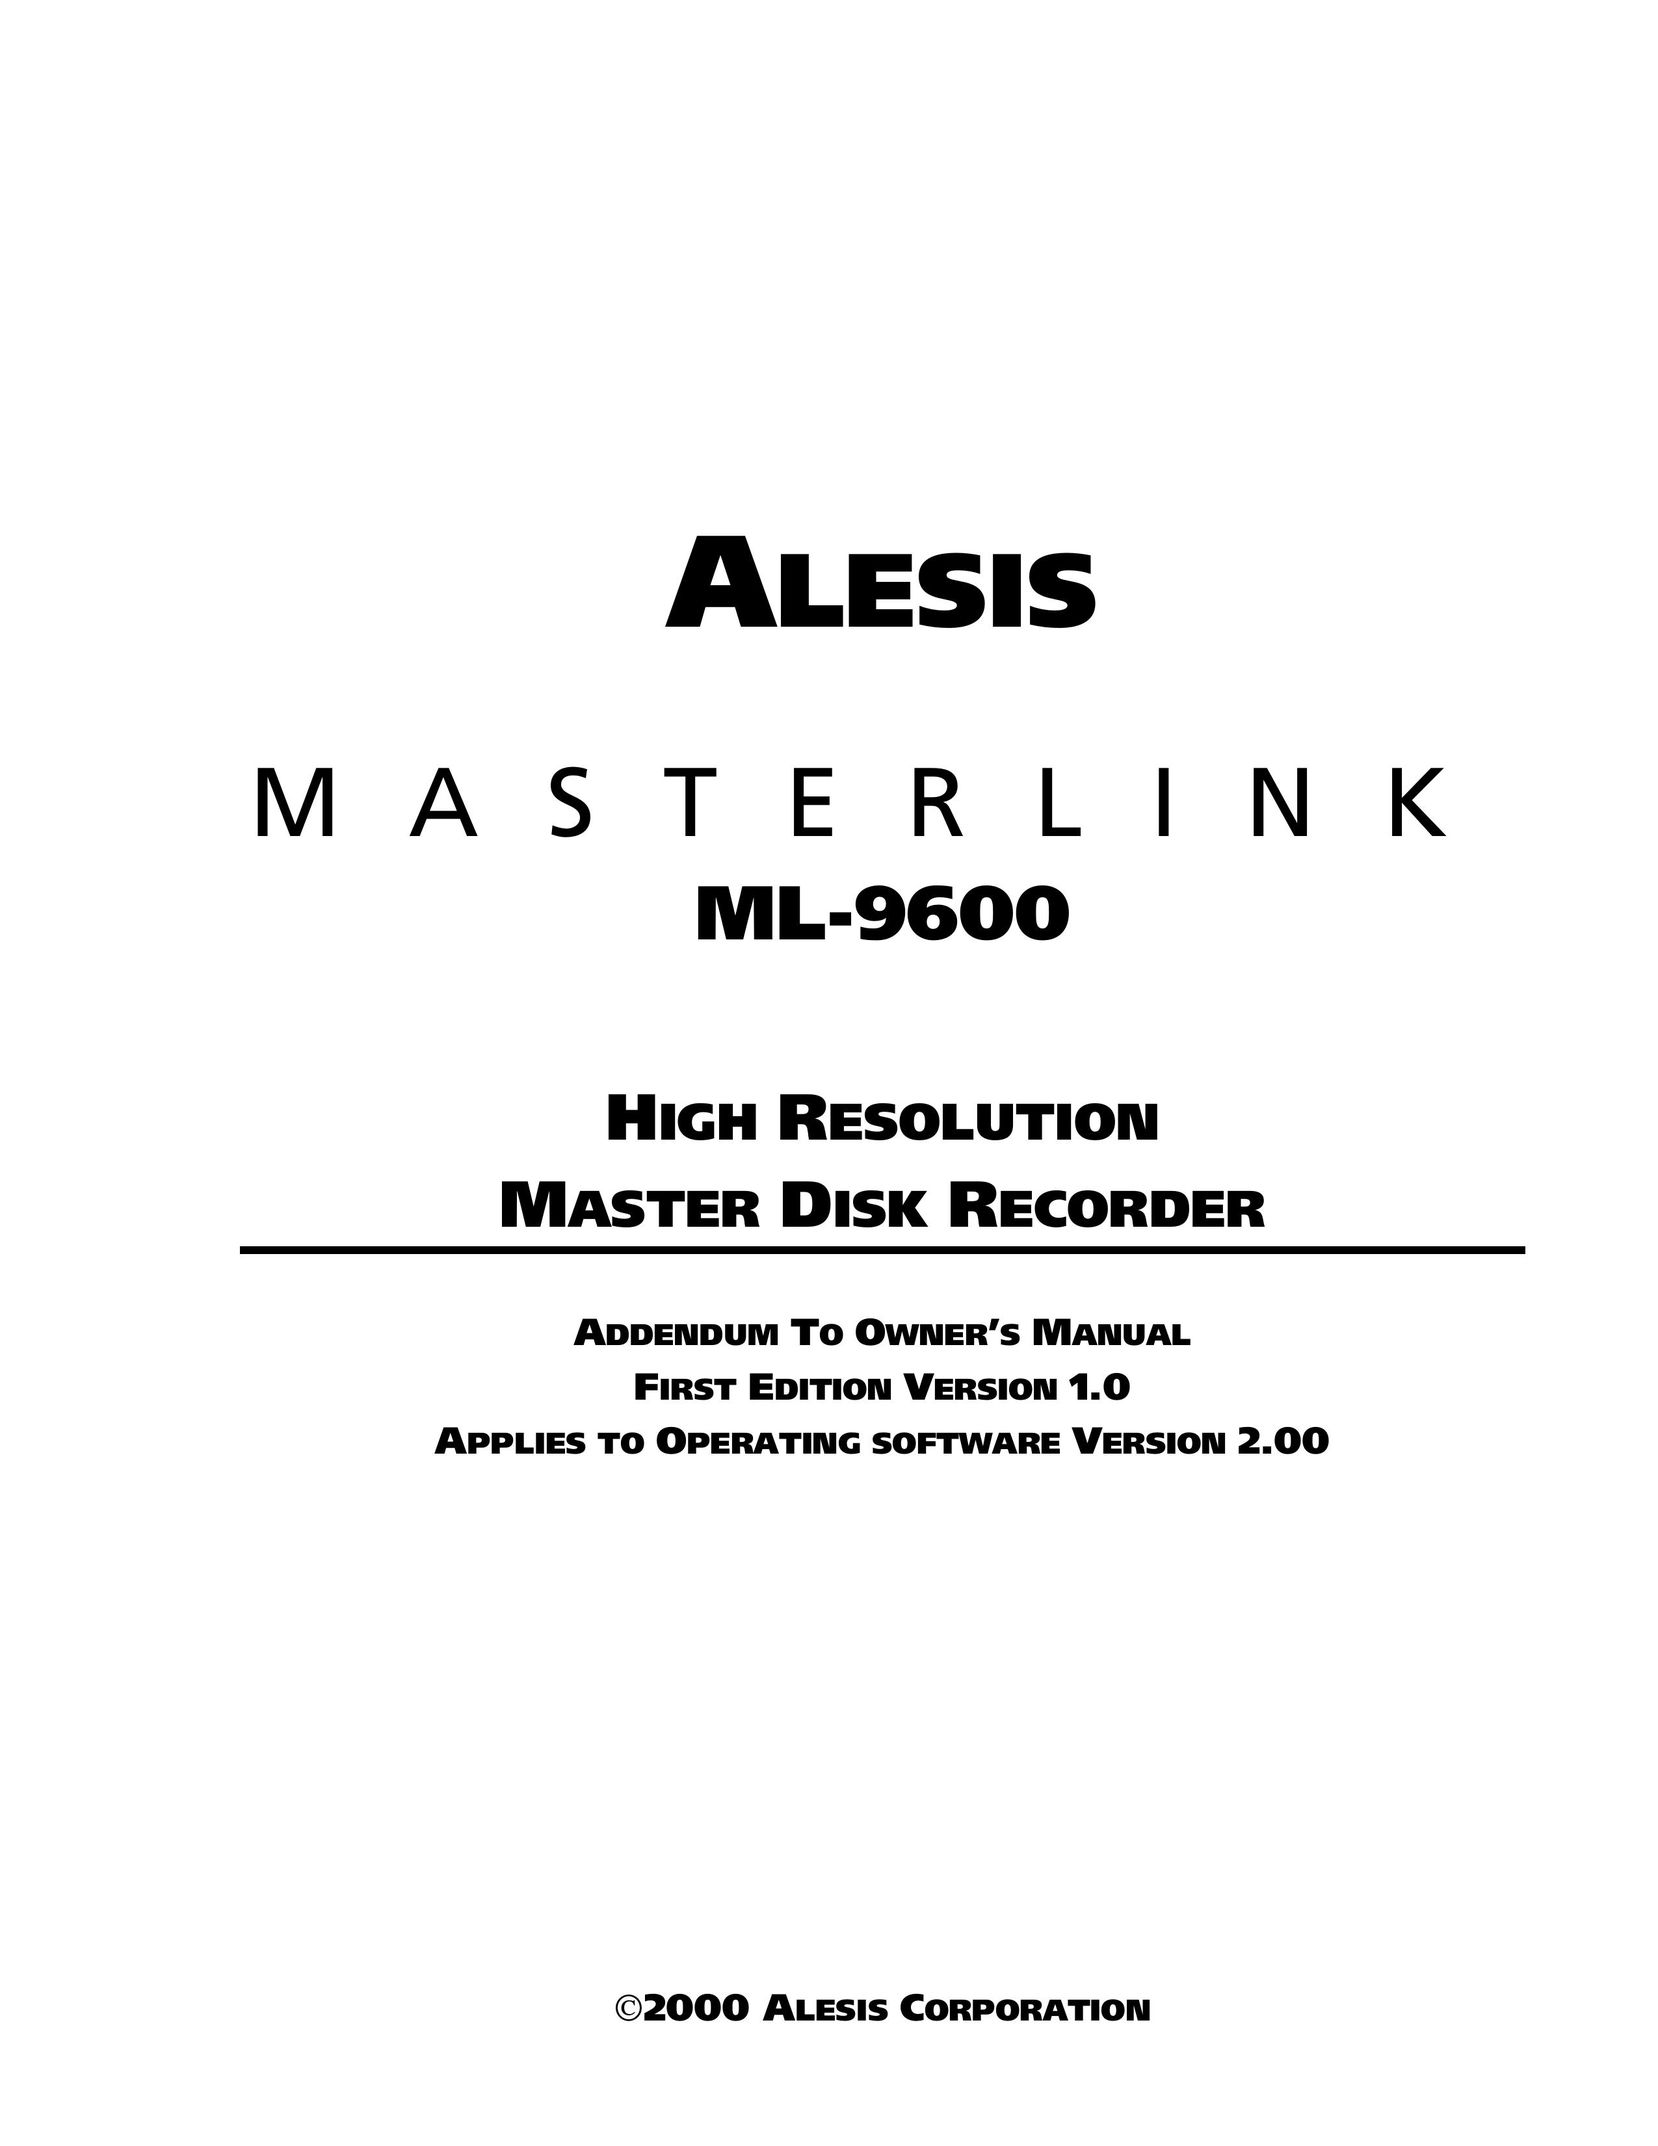 Alesis ML-9600 CD Player User Manual (Page 1)